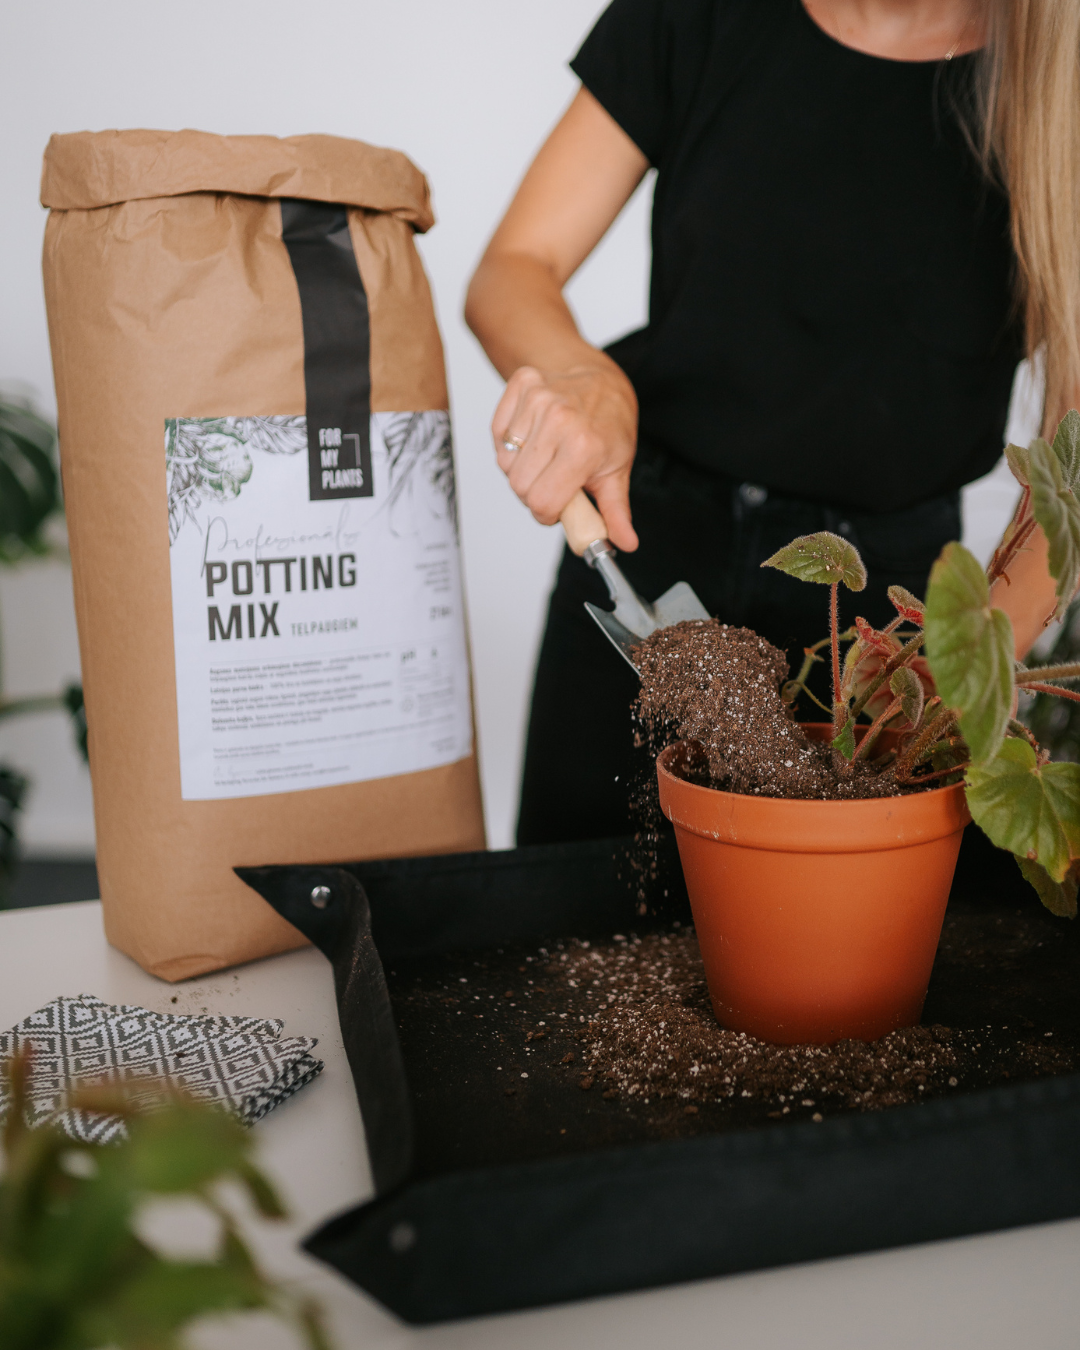 Potting Mix (27 liters) for houseplants